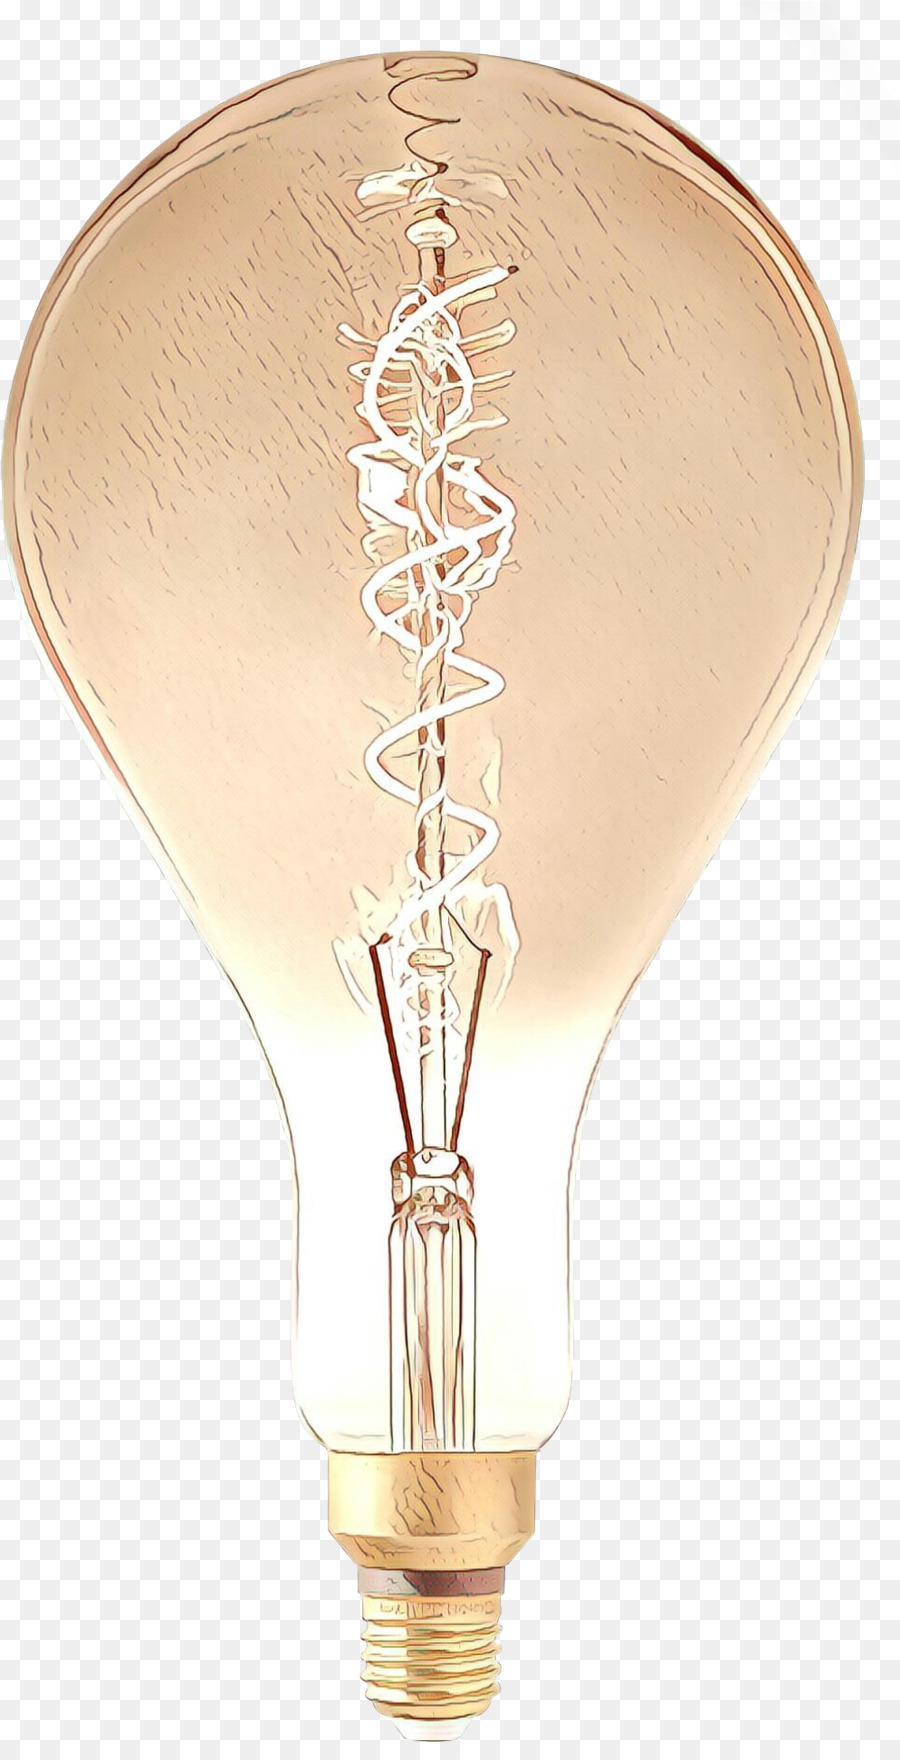 Incandescent light bulb Incandescence Design Lamp